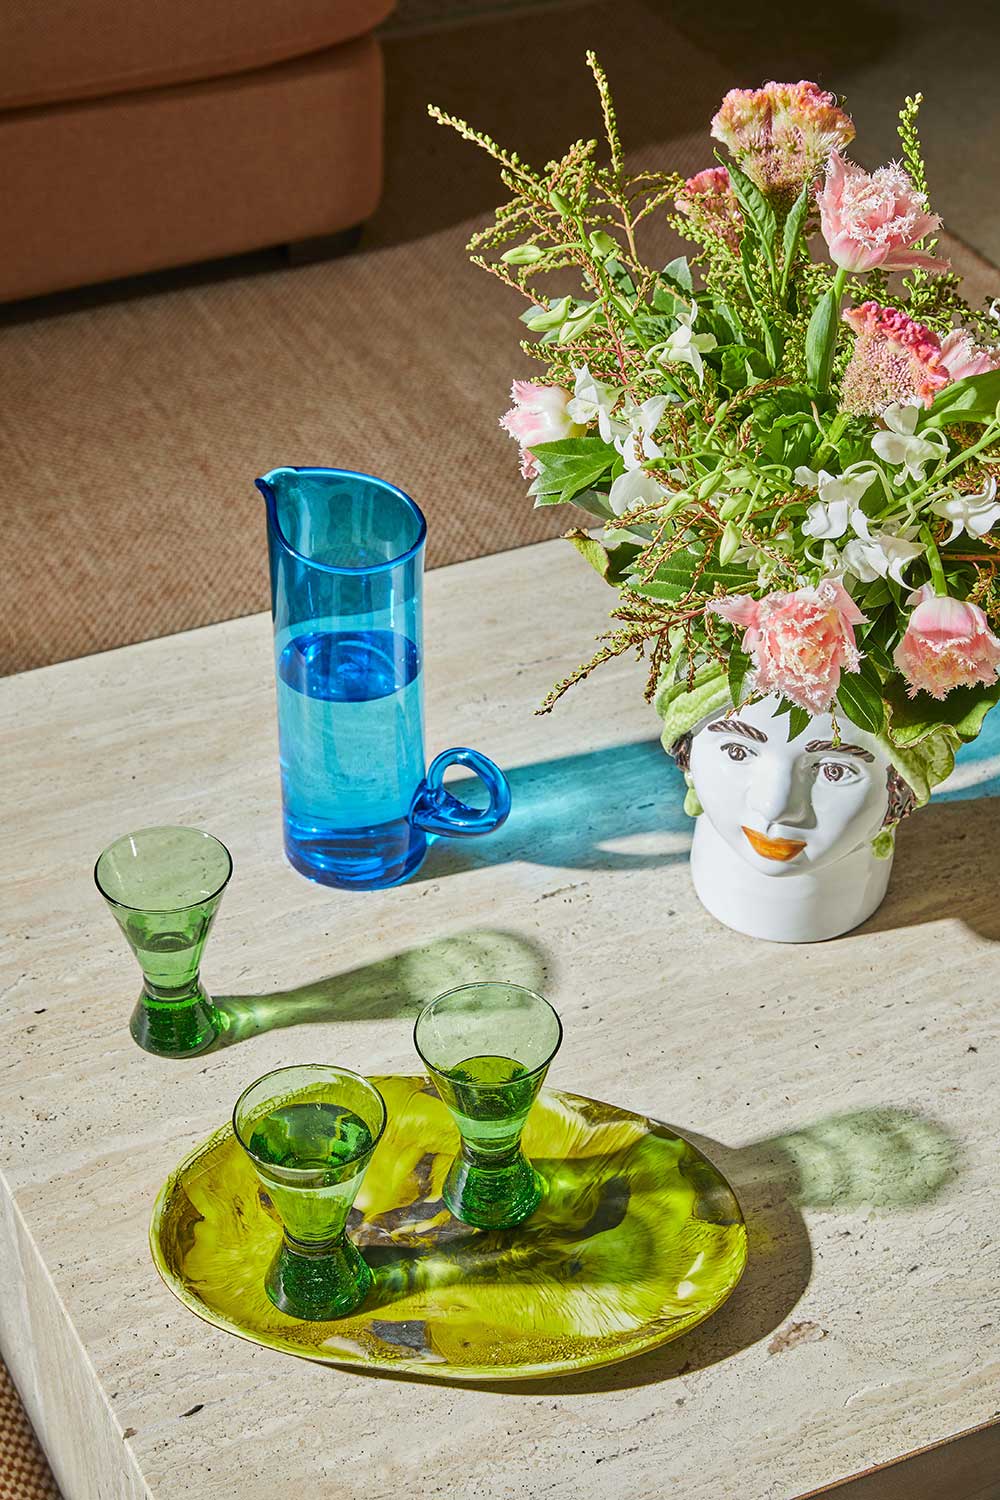 Moroccan Beldi Glassware - Set of 6